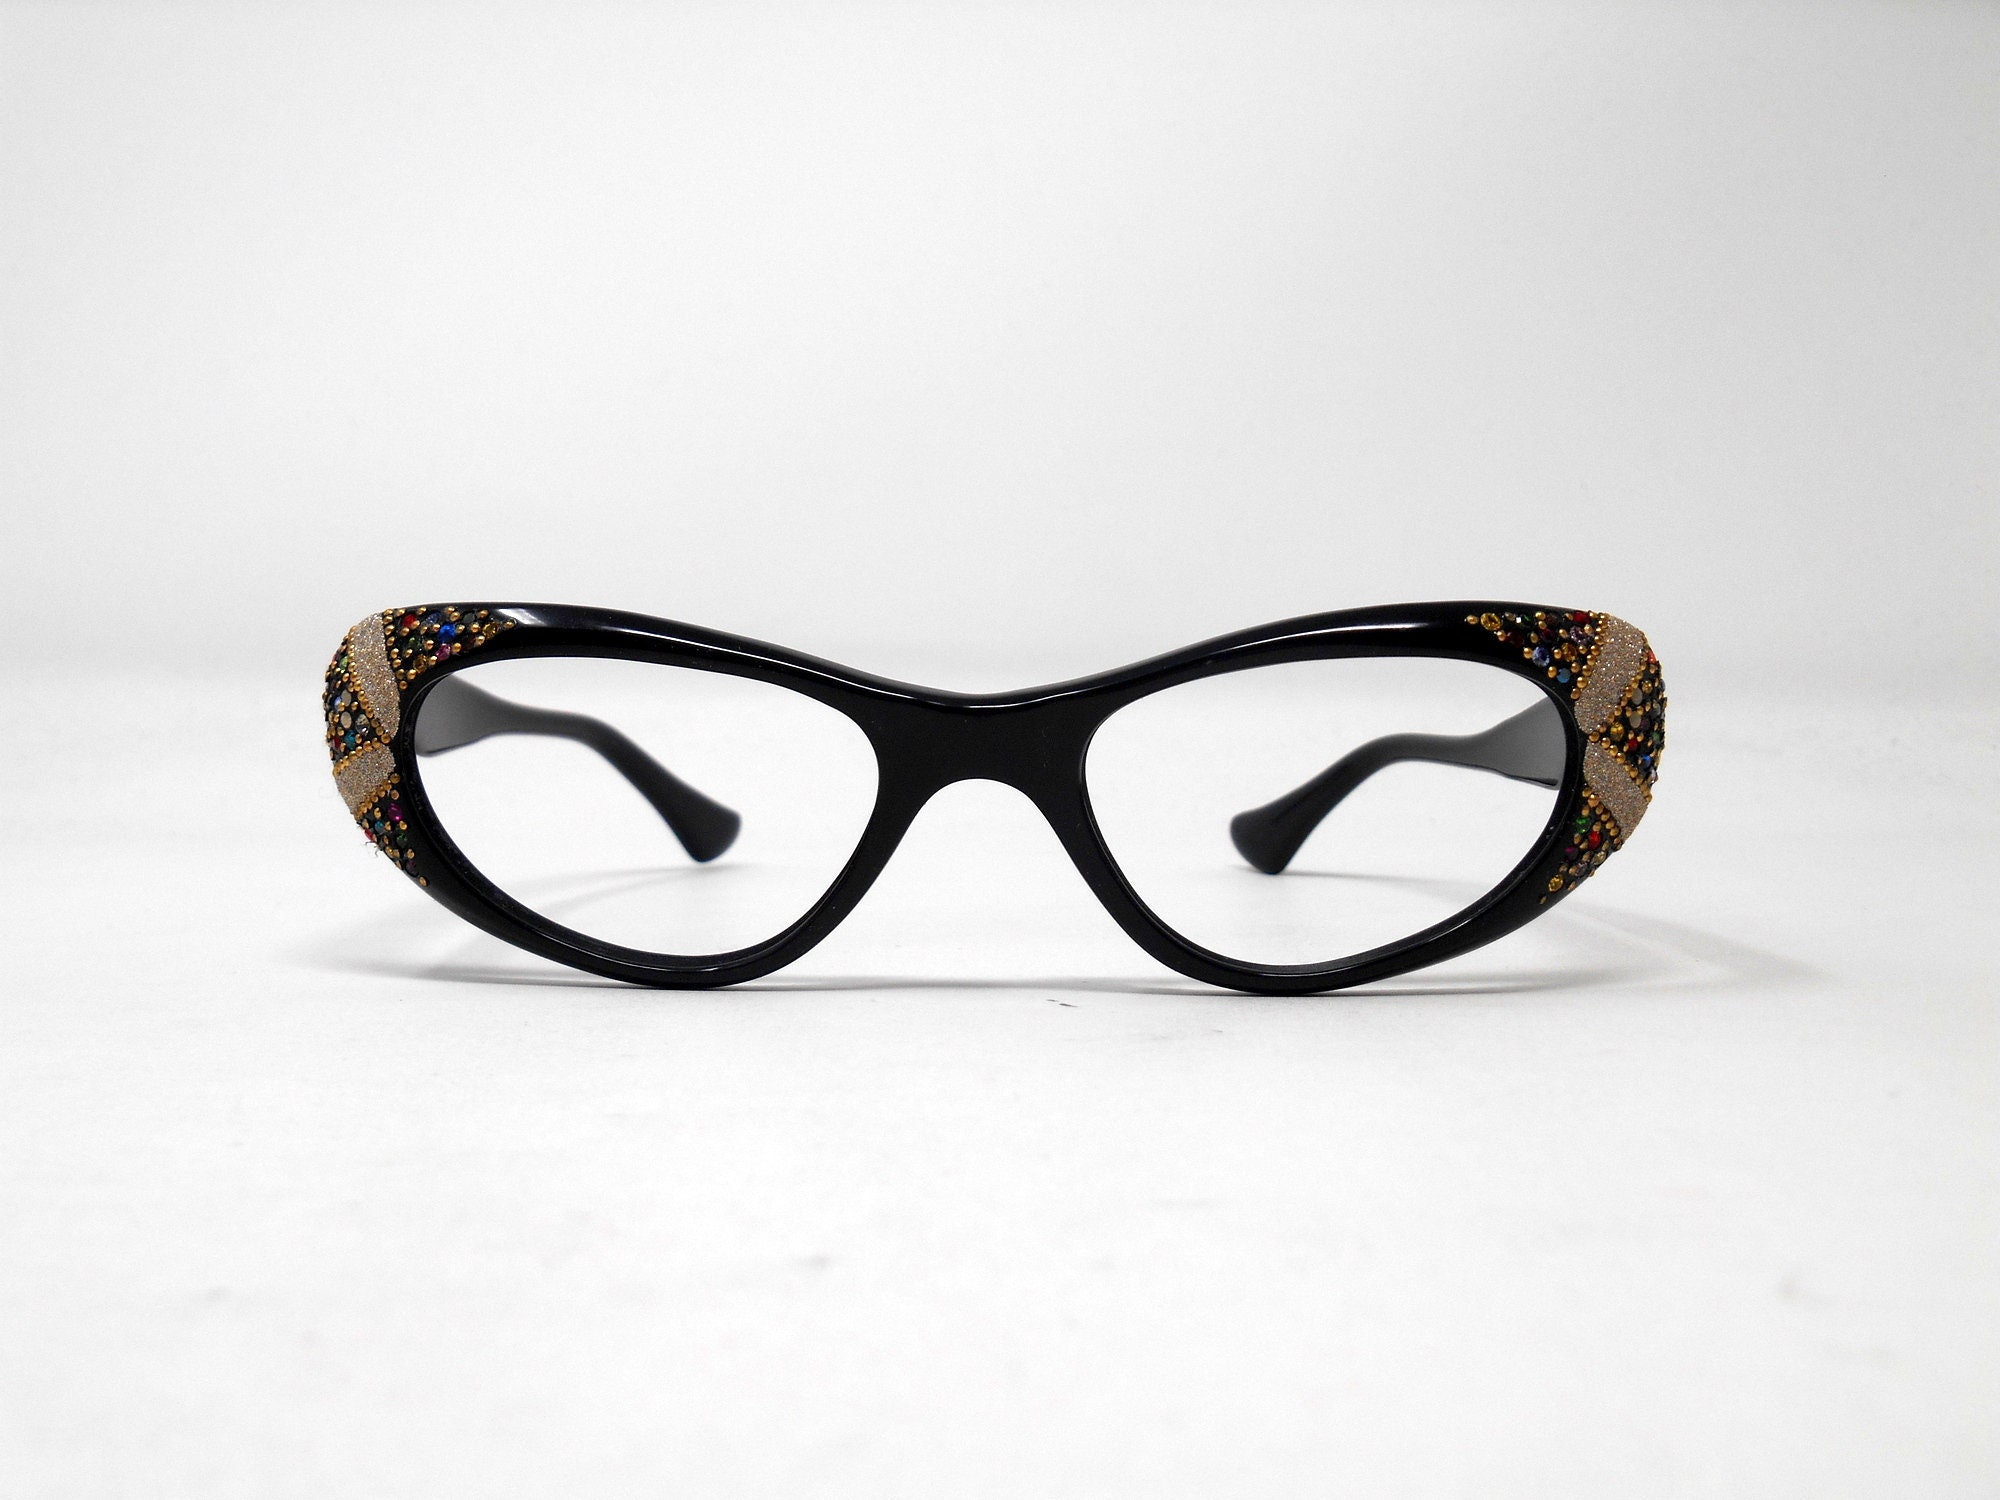 fabulous vintage sunglasses lunettes eyeglasses 1960 cat eye carved frame france rare